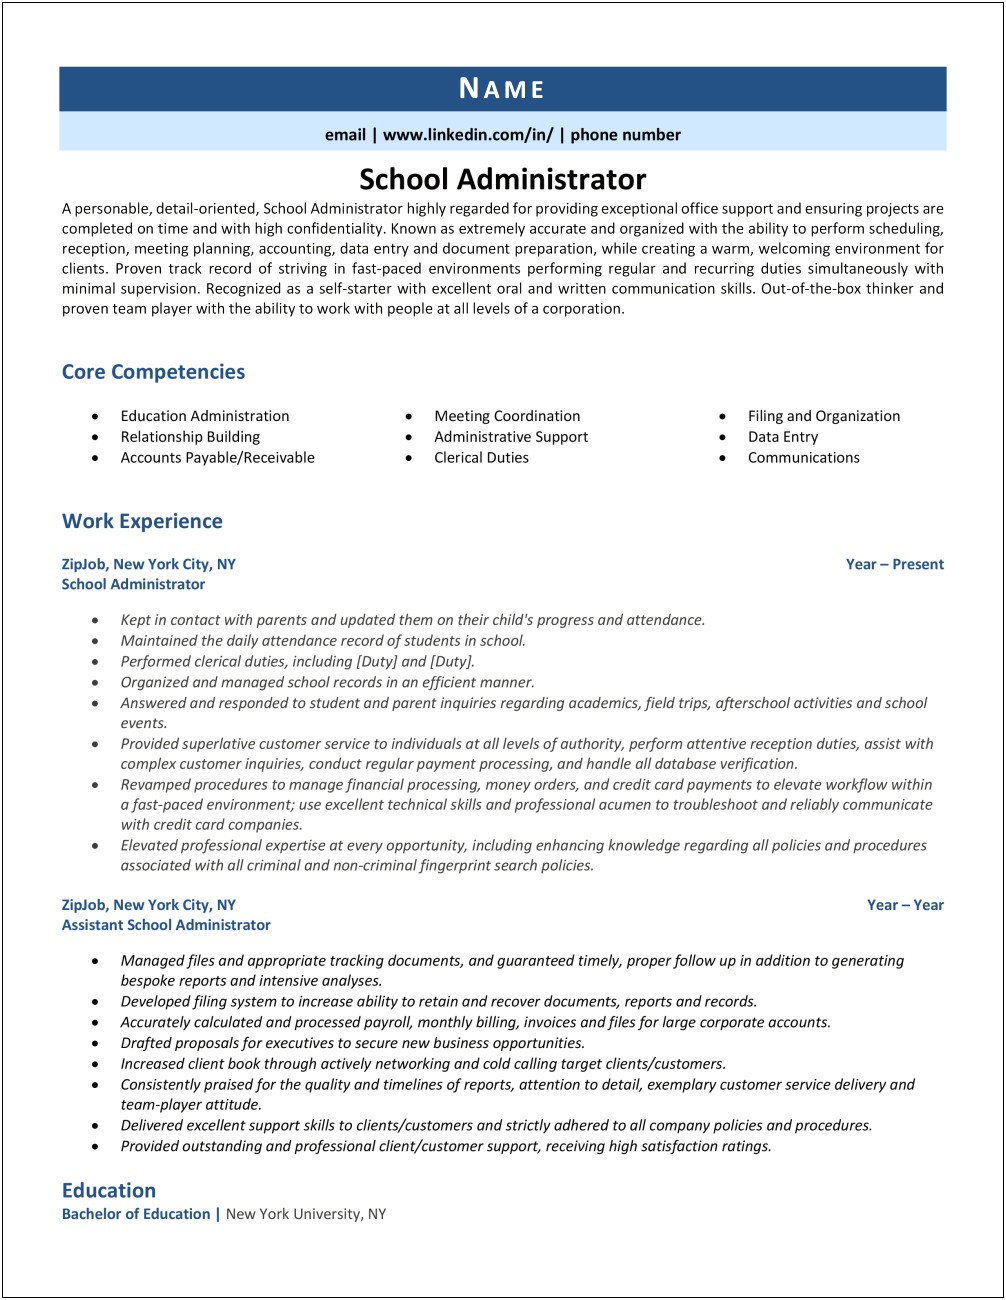 Sample Resume For School Adminstrative Position